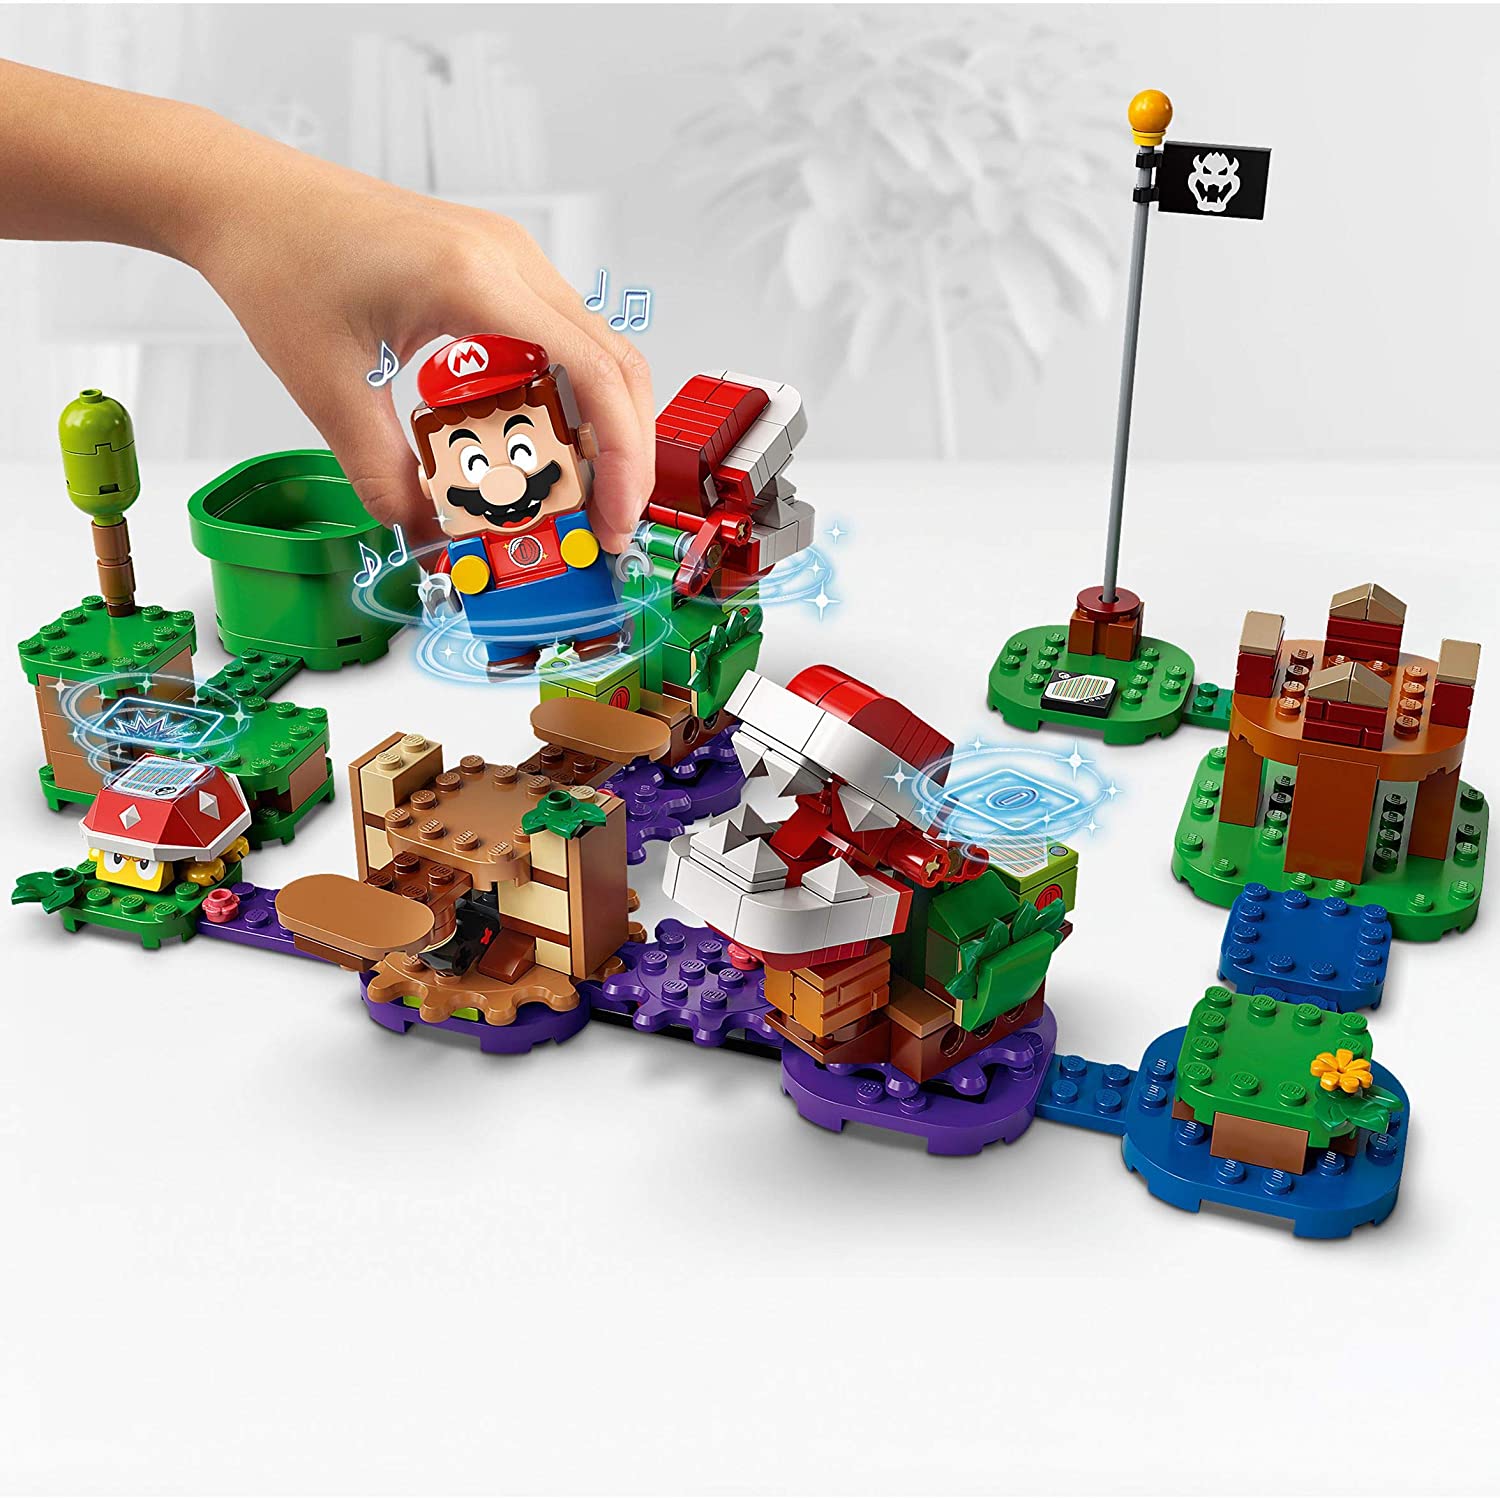 LEGO® Super Mario™ Pianta Piranha - Pack di espansione